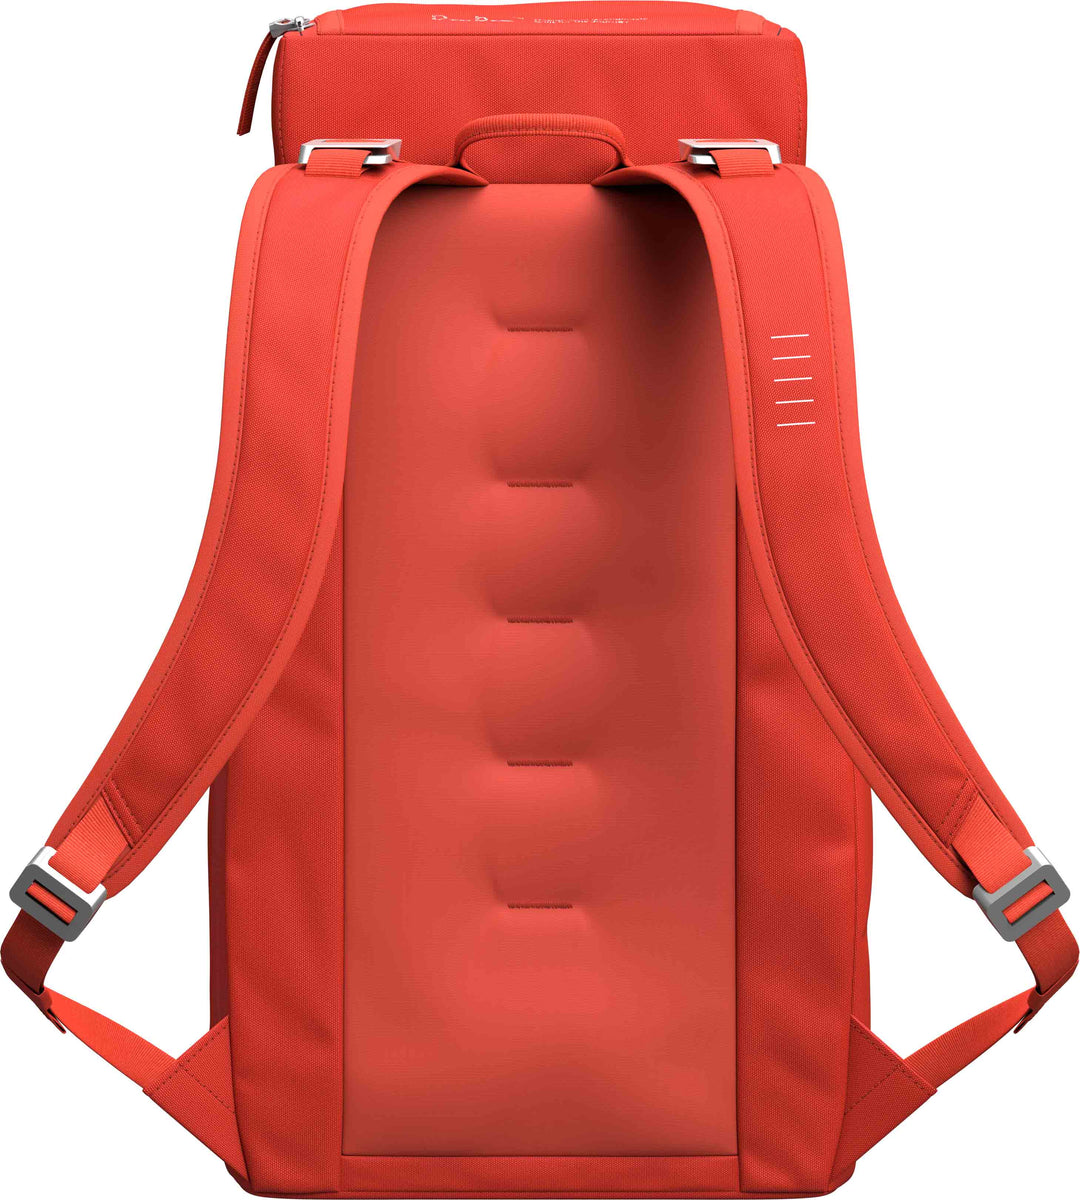 Db Hugger Backpack 25L Falu Red